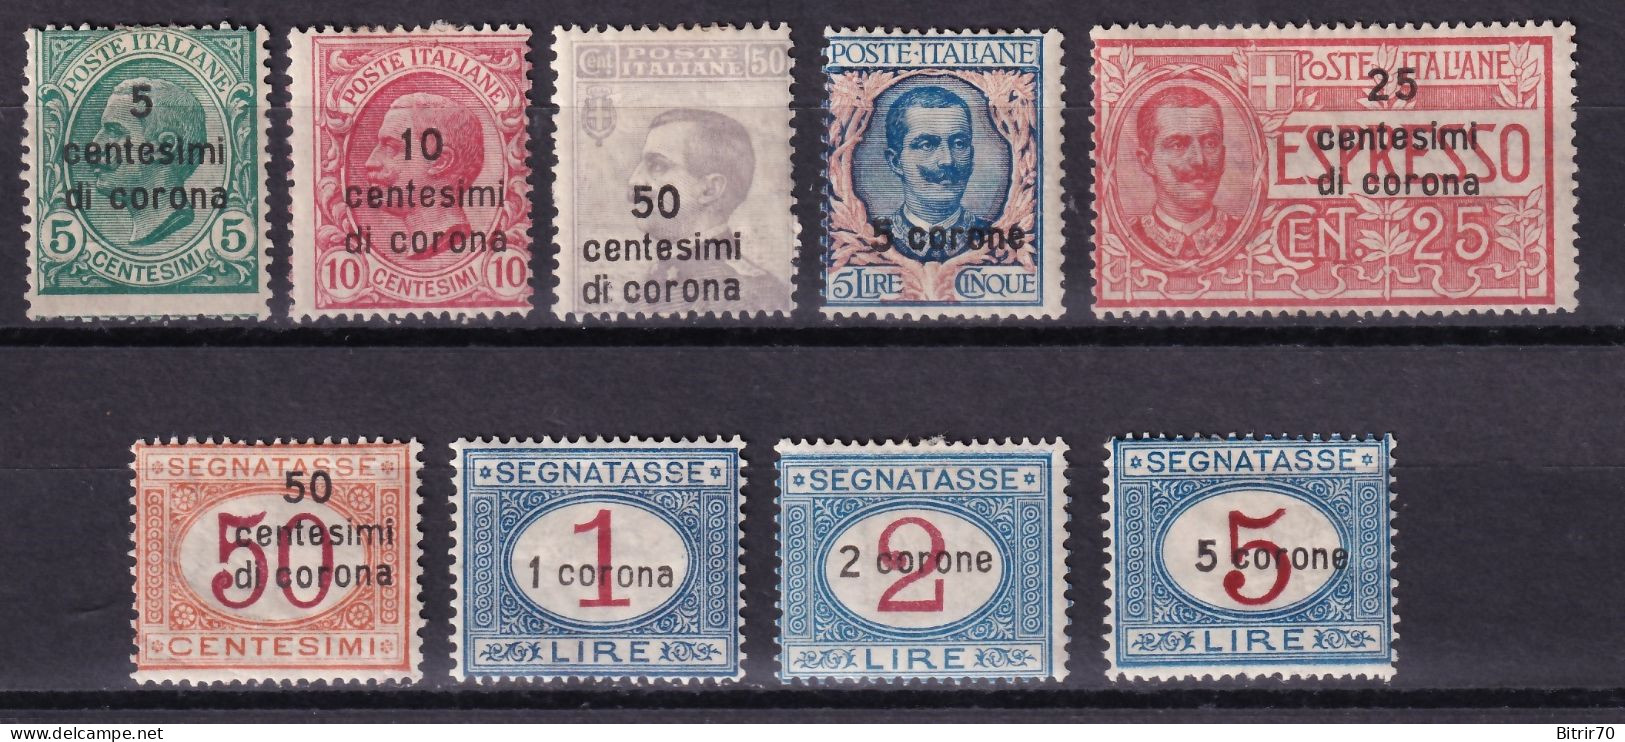 Italia, Dalmatia 1921-1922 Lote De Sellos, Distintos Valores, MH - Dalmatia